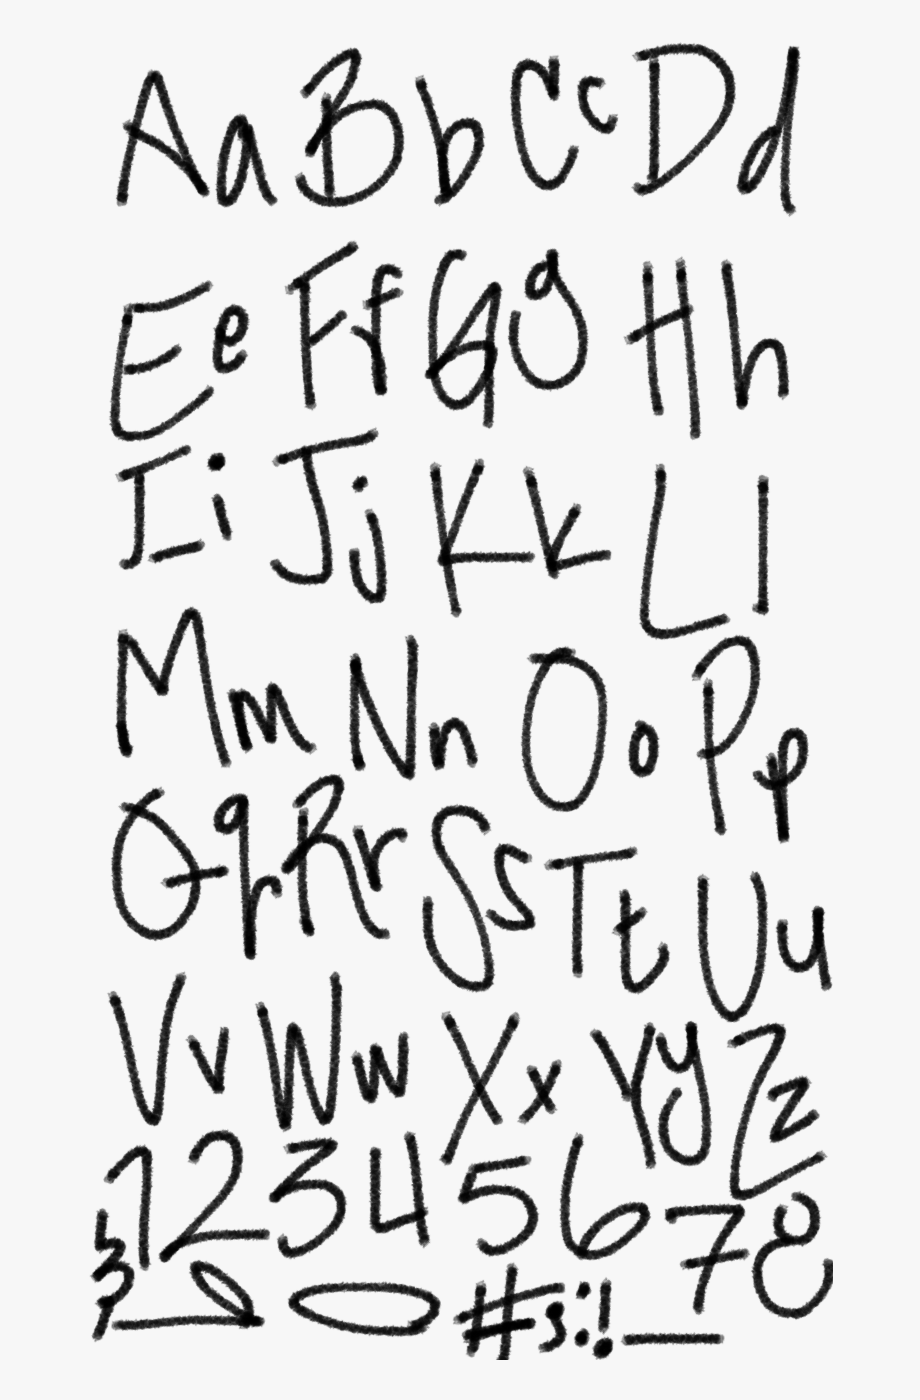 handwriting clipart alphabet